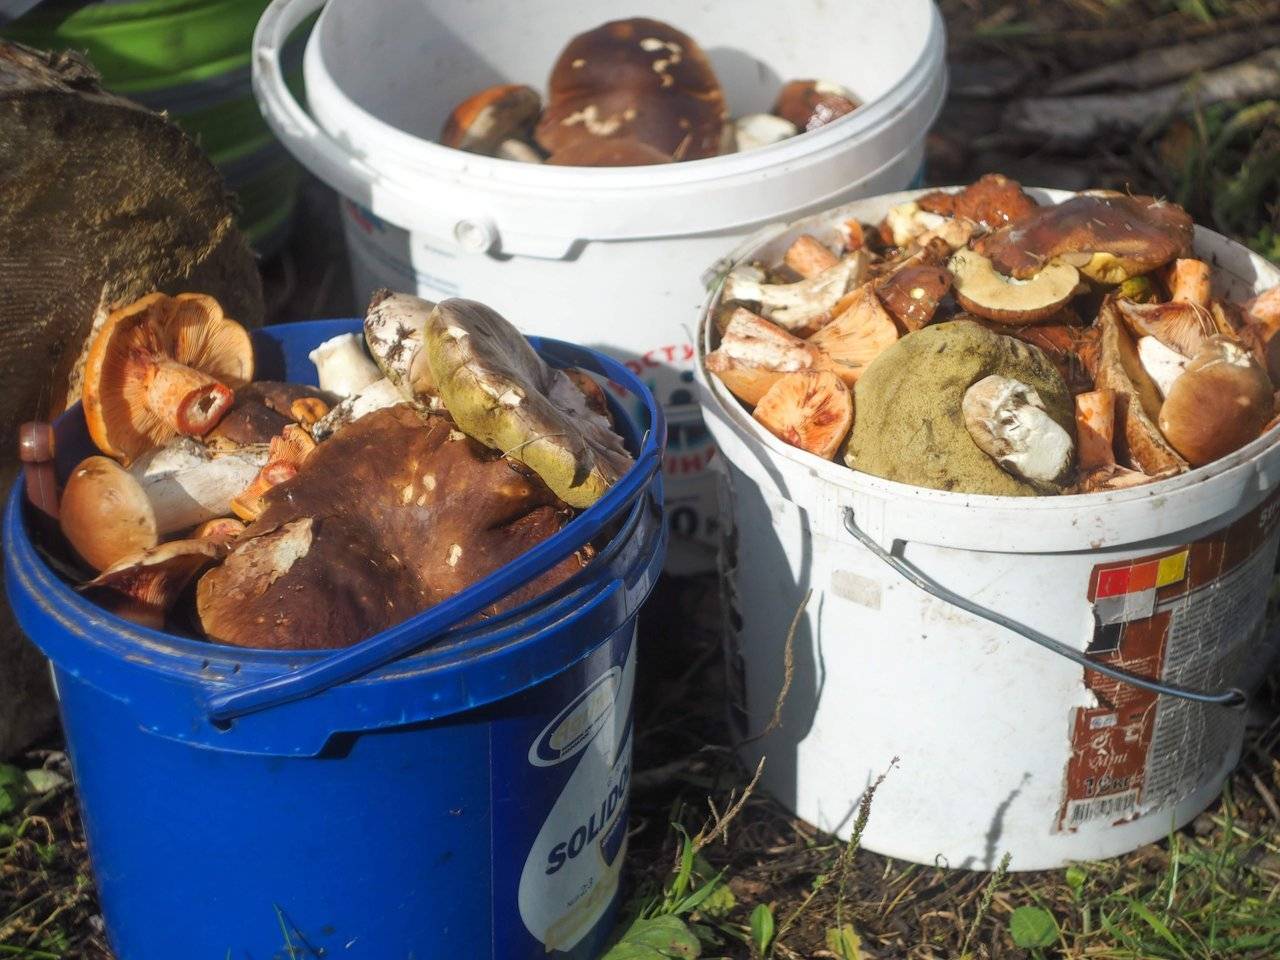 Our mushroom find